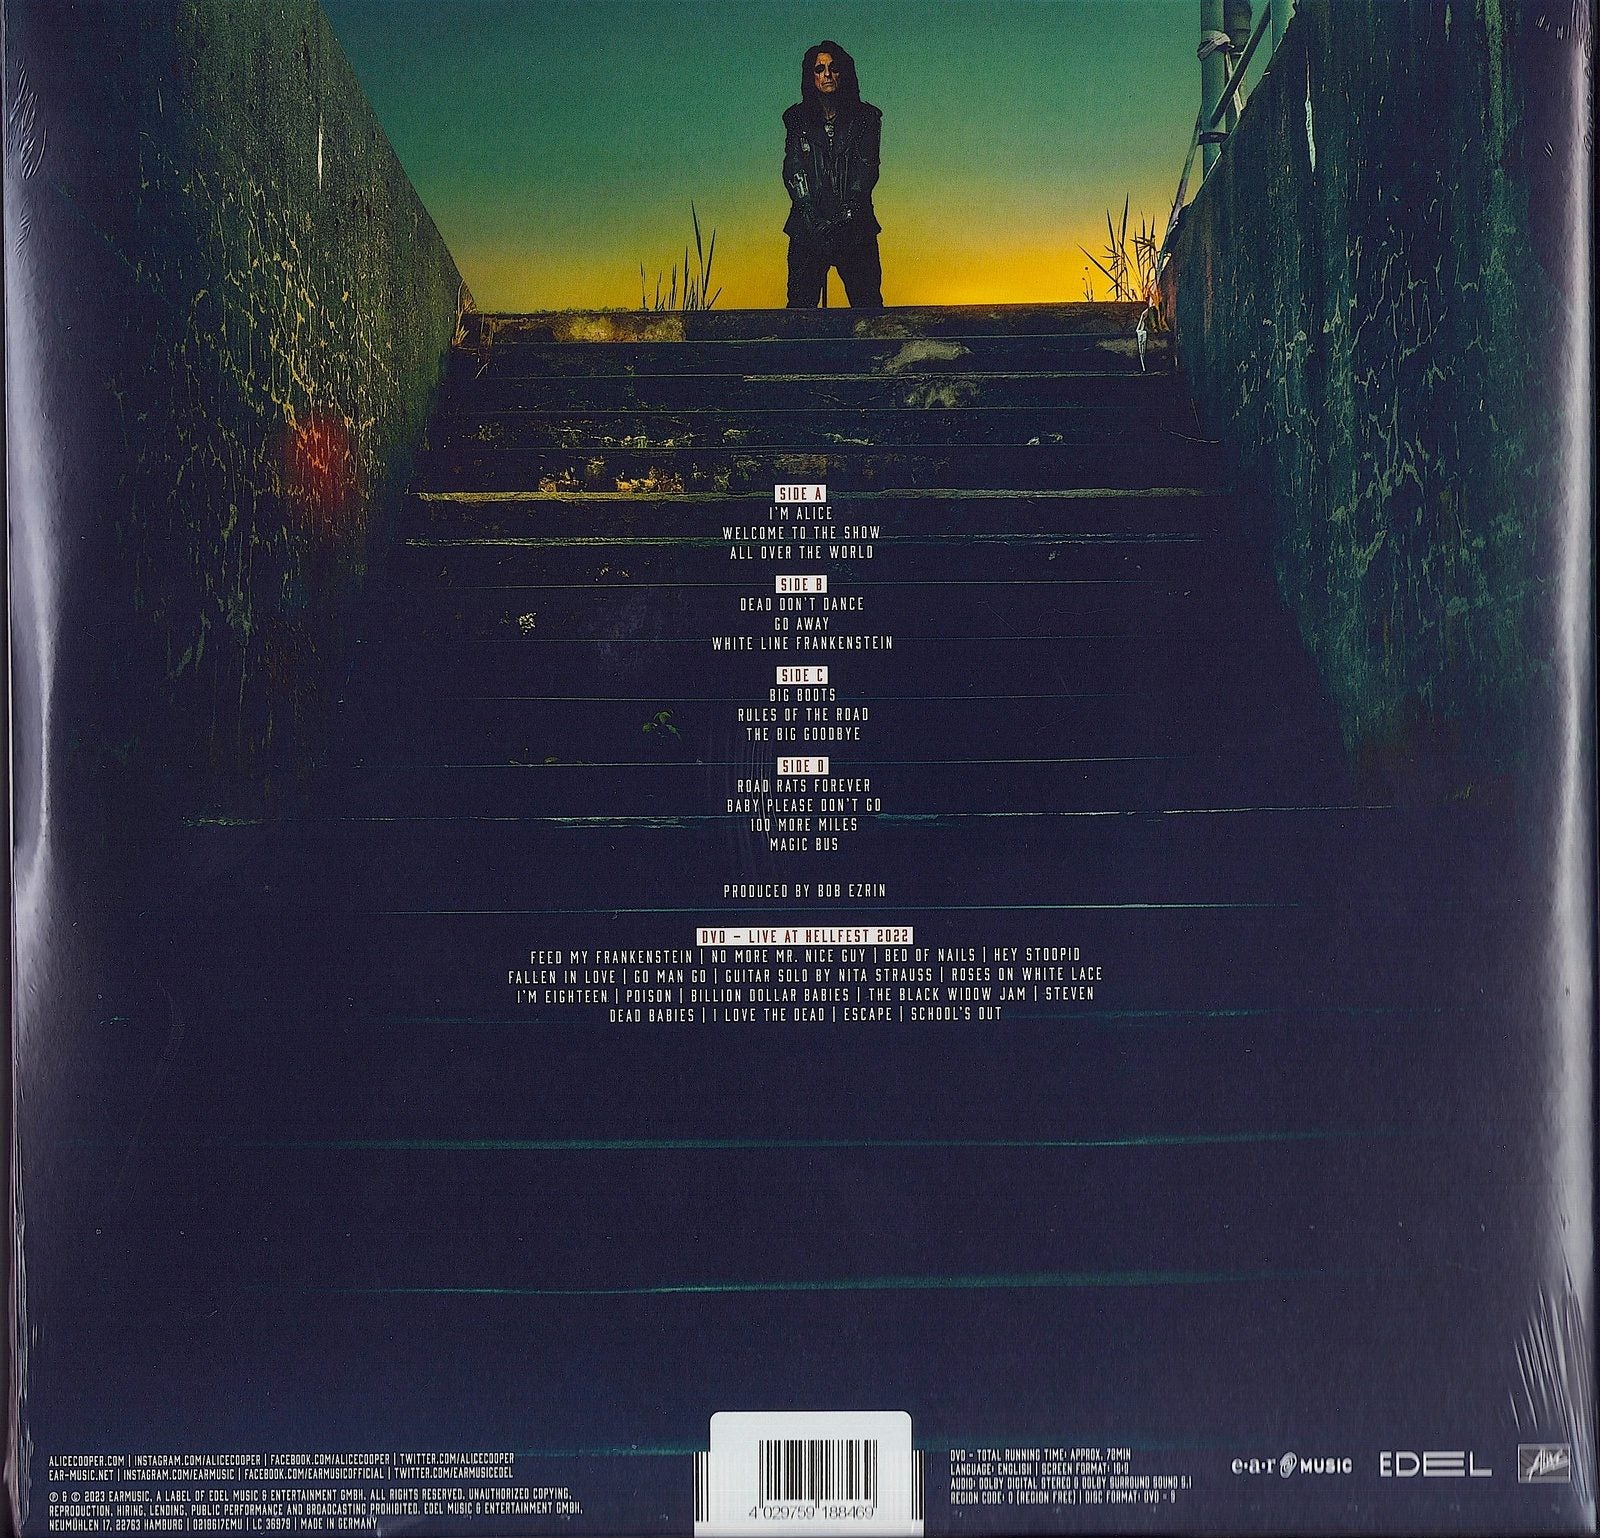 Alice Cooper - Road Black & Blue Marbled Vinyl 2x12" + DVD - Limited Edition